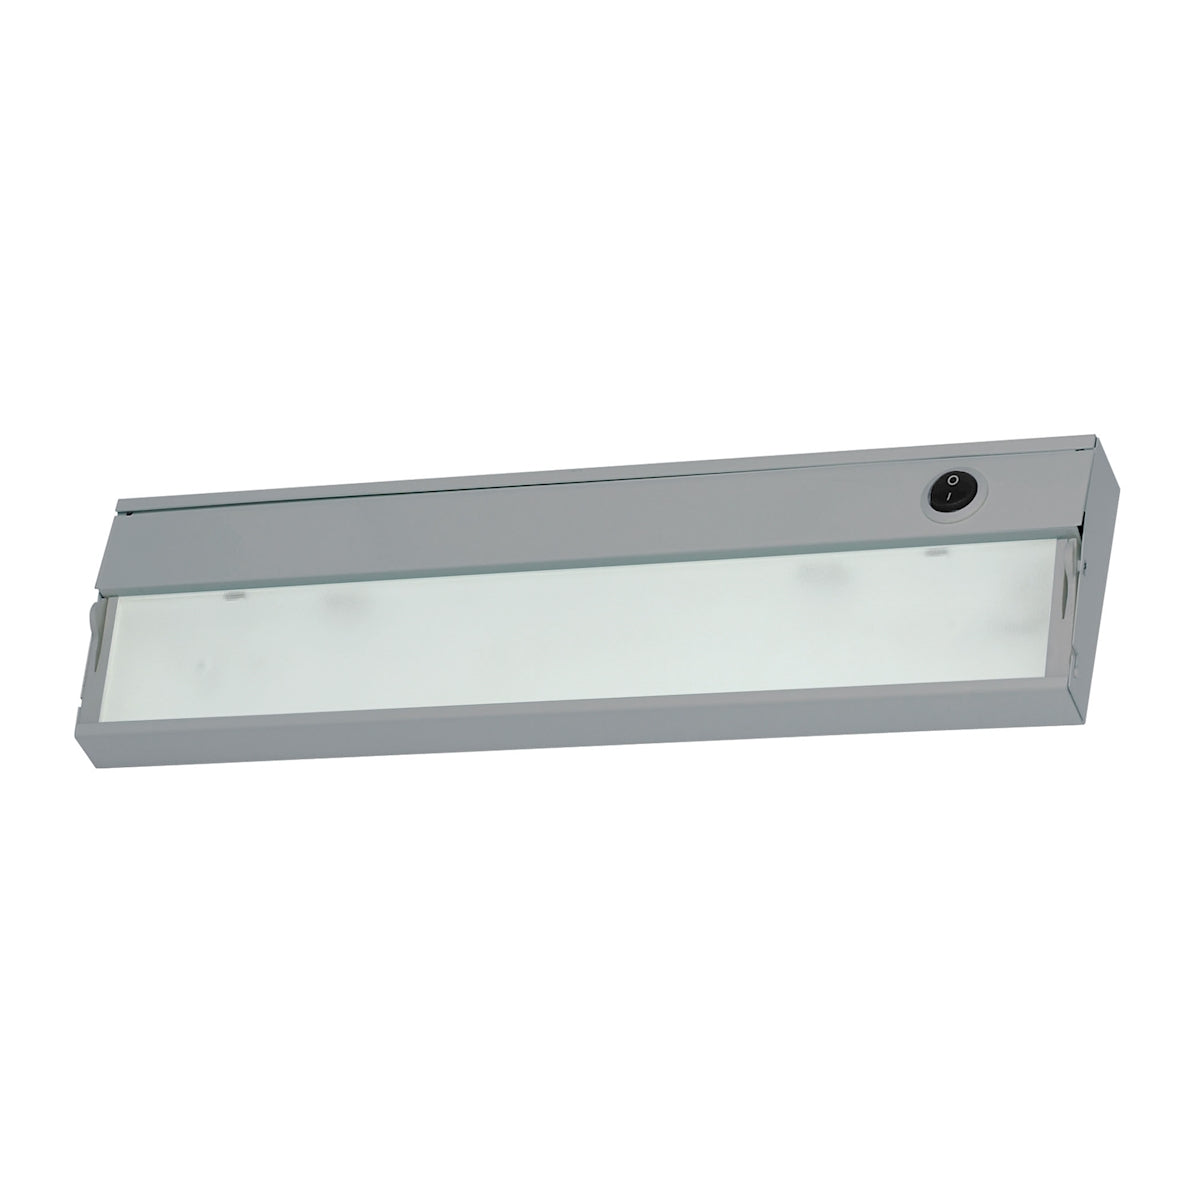 ELK Lighting HZ109RSF ZeeLite 1-Light Under-cabinet Light in Stainless Steel with Diffused Glass